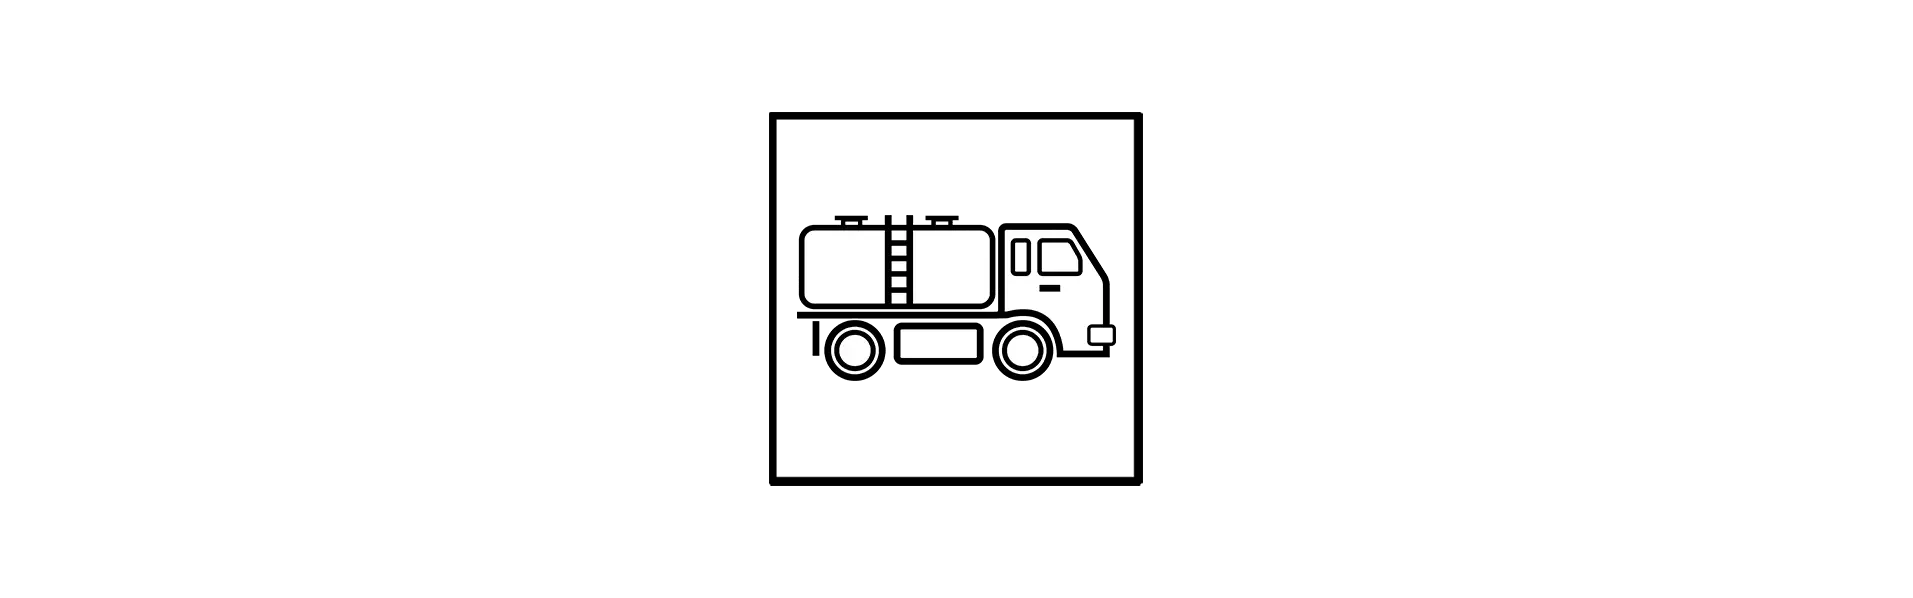 mobile-fleet-fuel-delivery-management